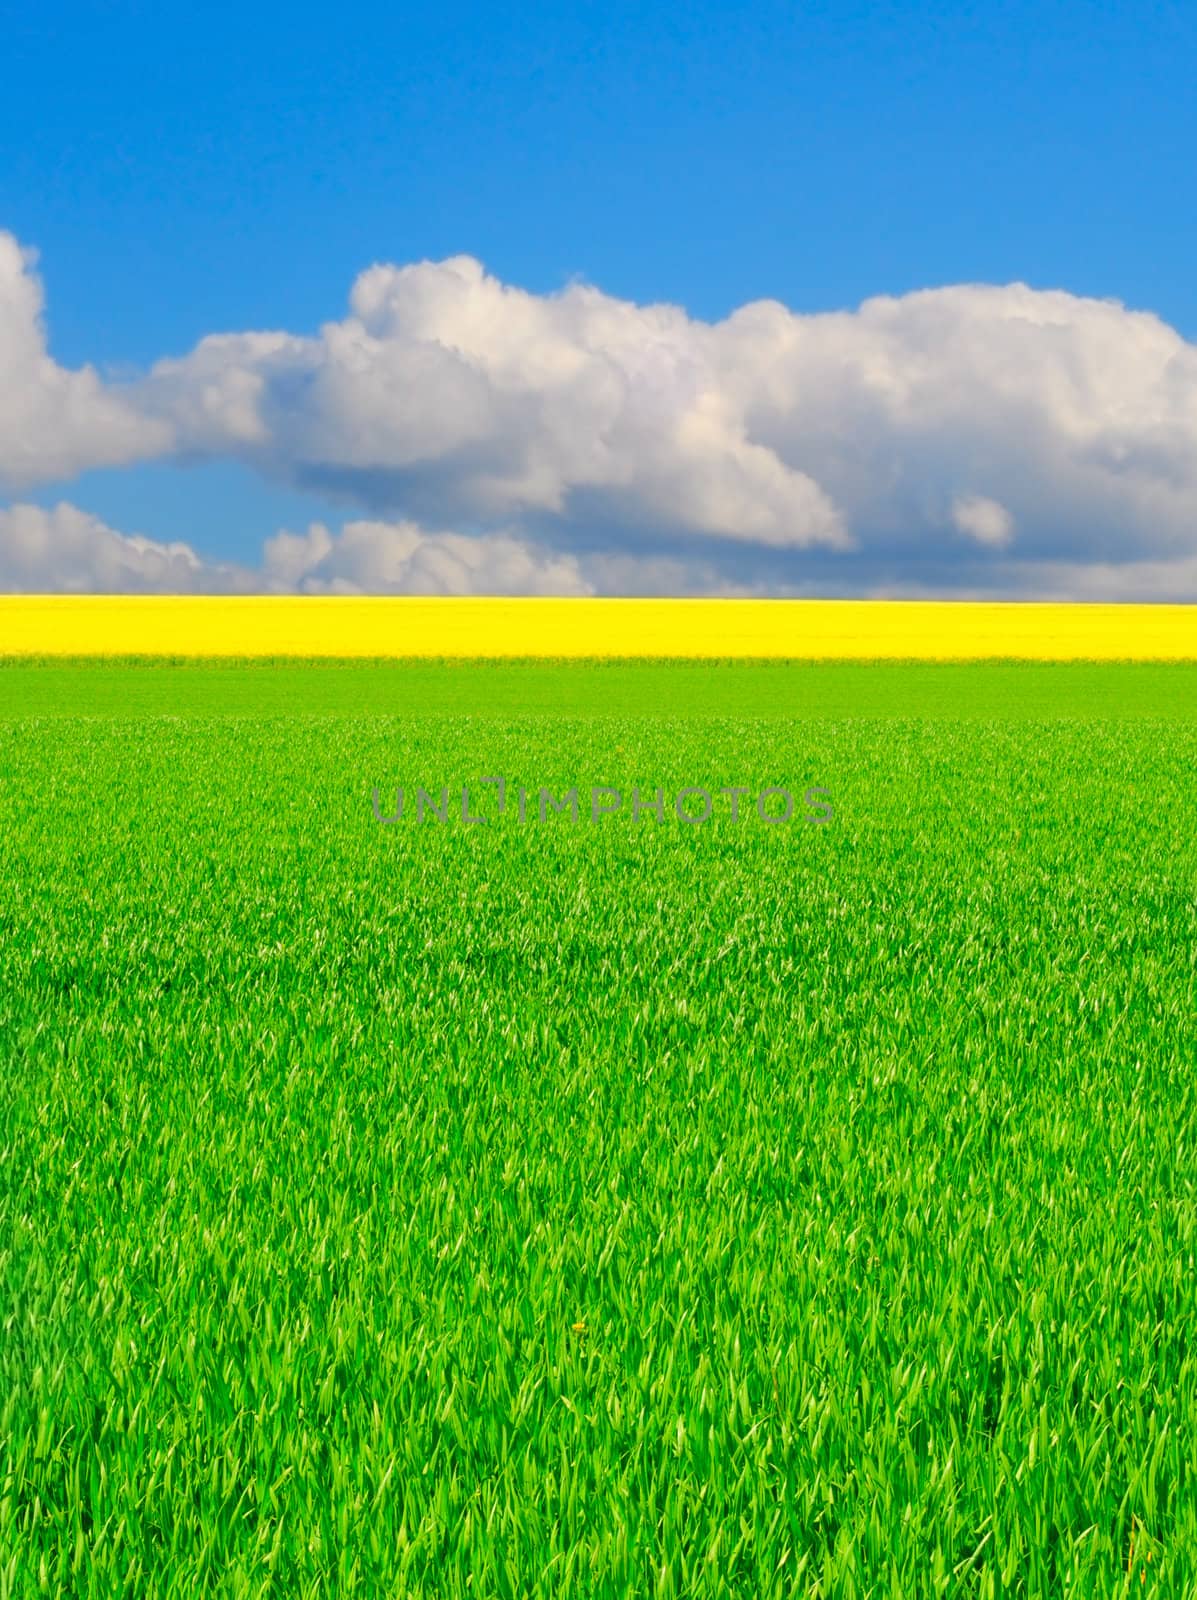 Green and yellow farmland